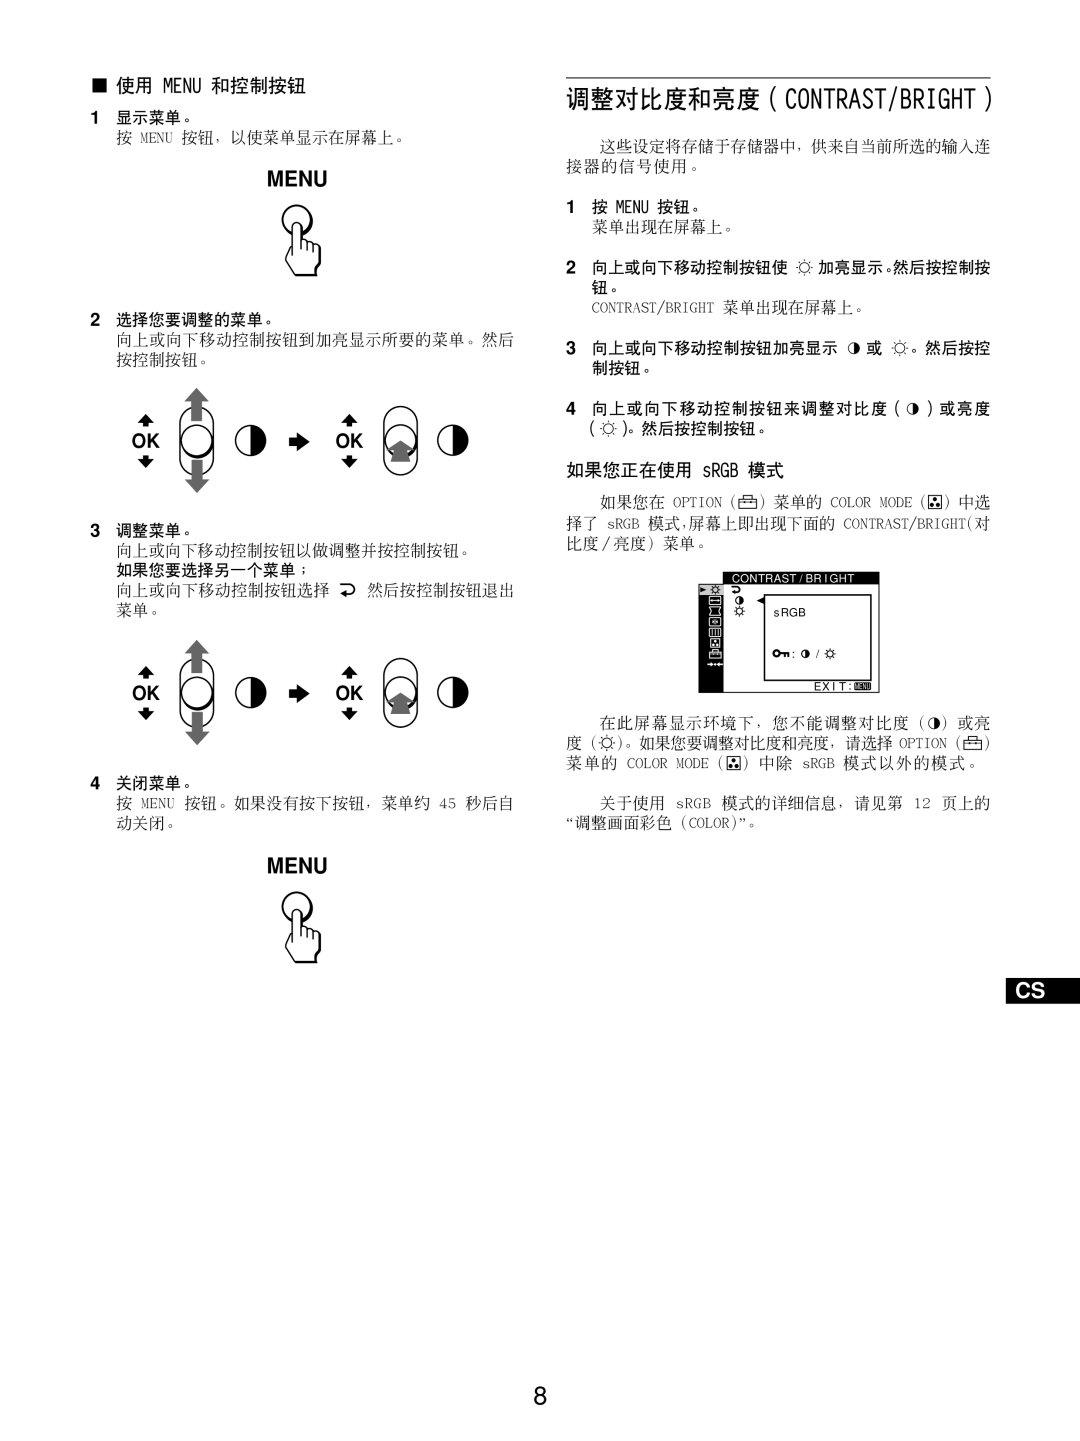 Sony GDM-5510 operating instructions 调整对比度和亮度（Contrast/Bright）, 使用 Menu 和控制按钮, 如果您正在使用 sRGB 